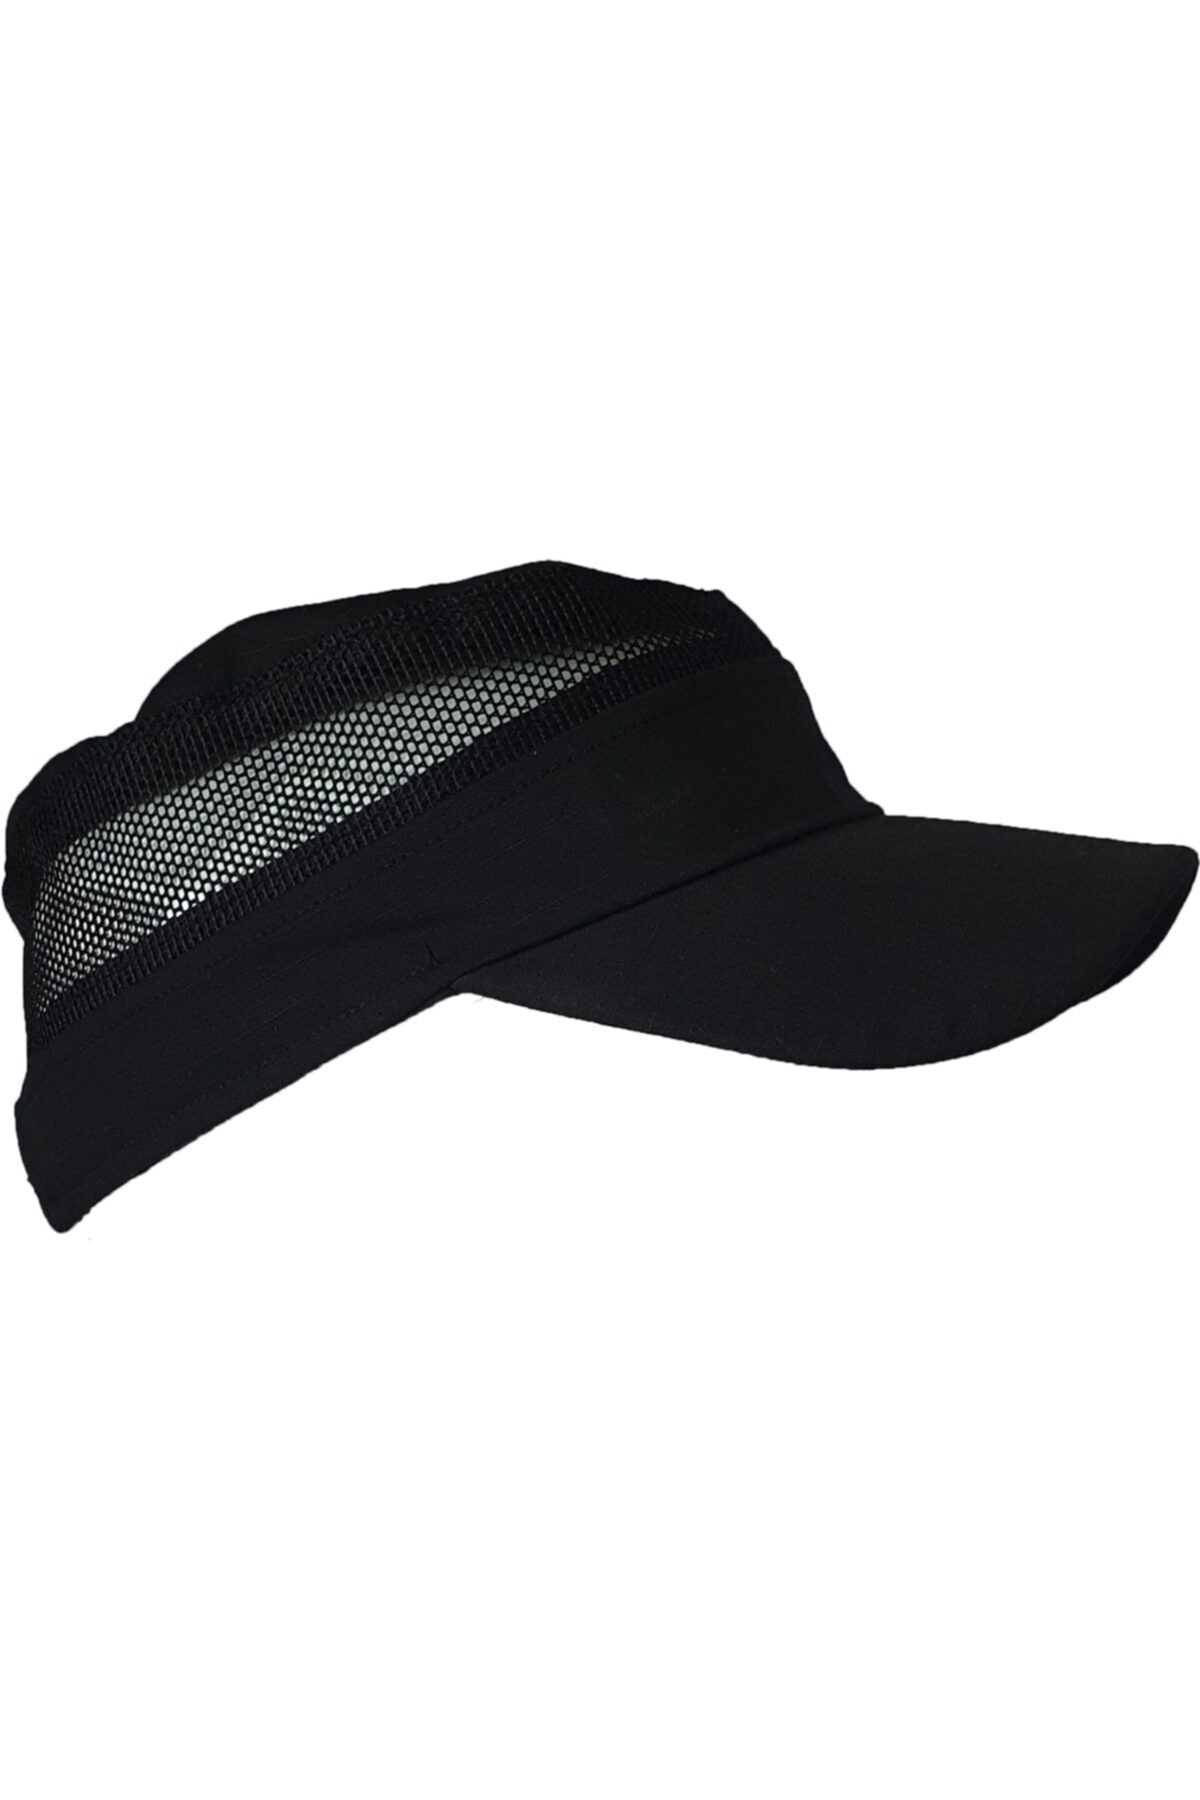 کلاه مردانه حراجی شیک BİKATEX رنگ مشکی کد ty109067513